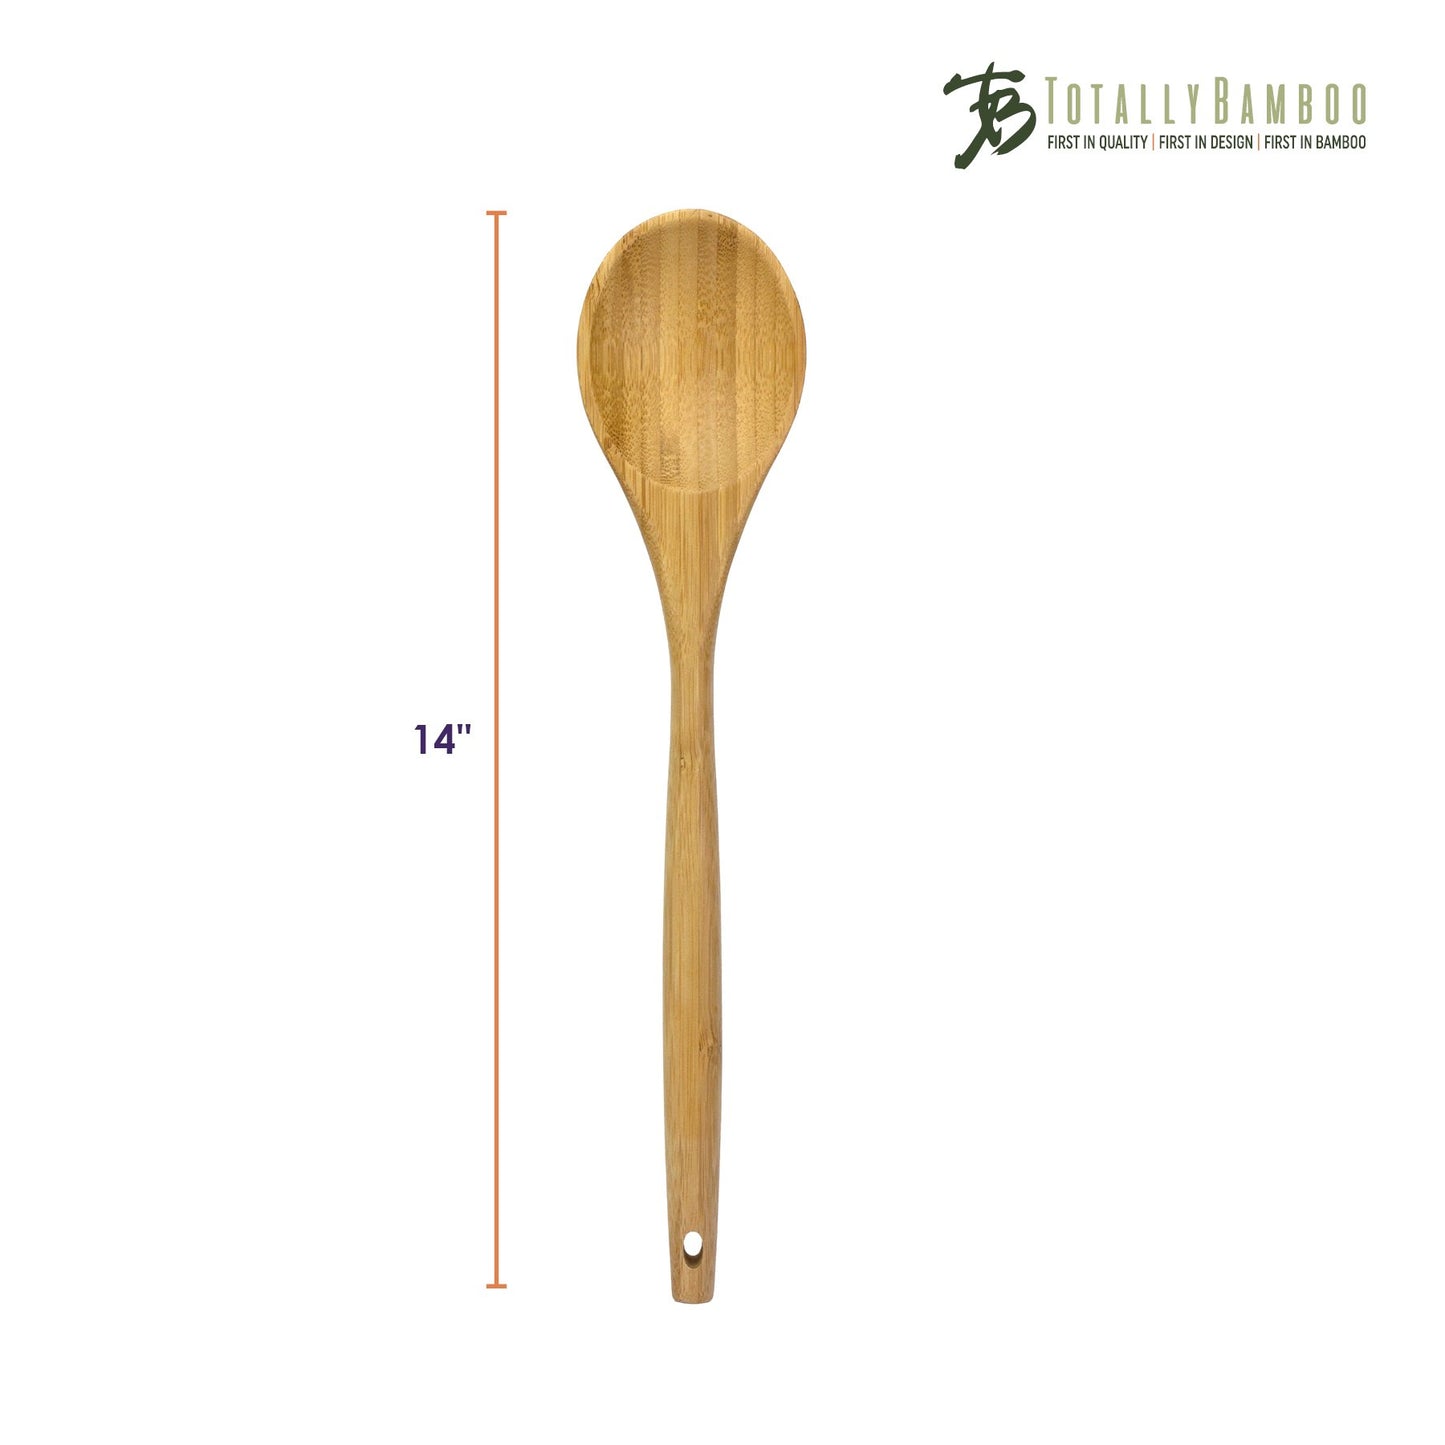 14" Lambootensil Bamboo Mixing Spoon